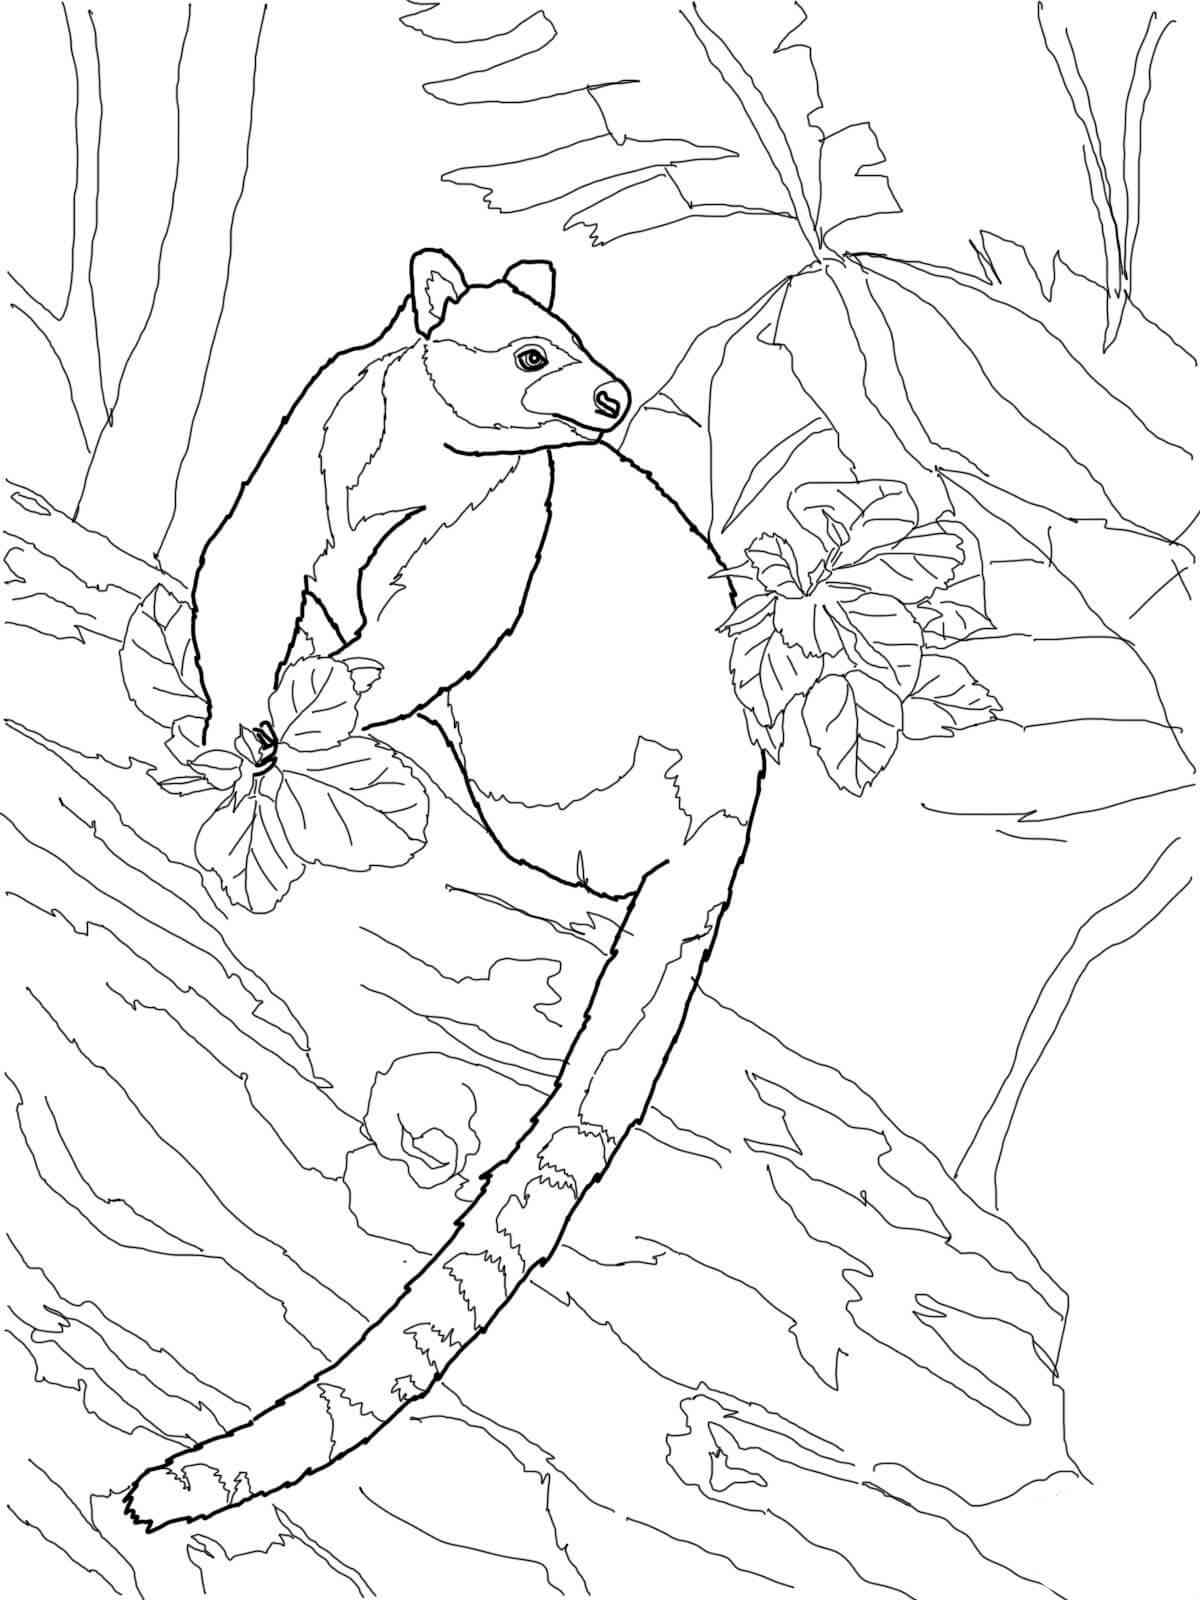 Goodfellow’s Tree Kangaroo coloring page